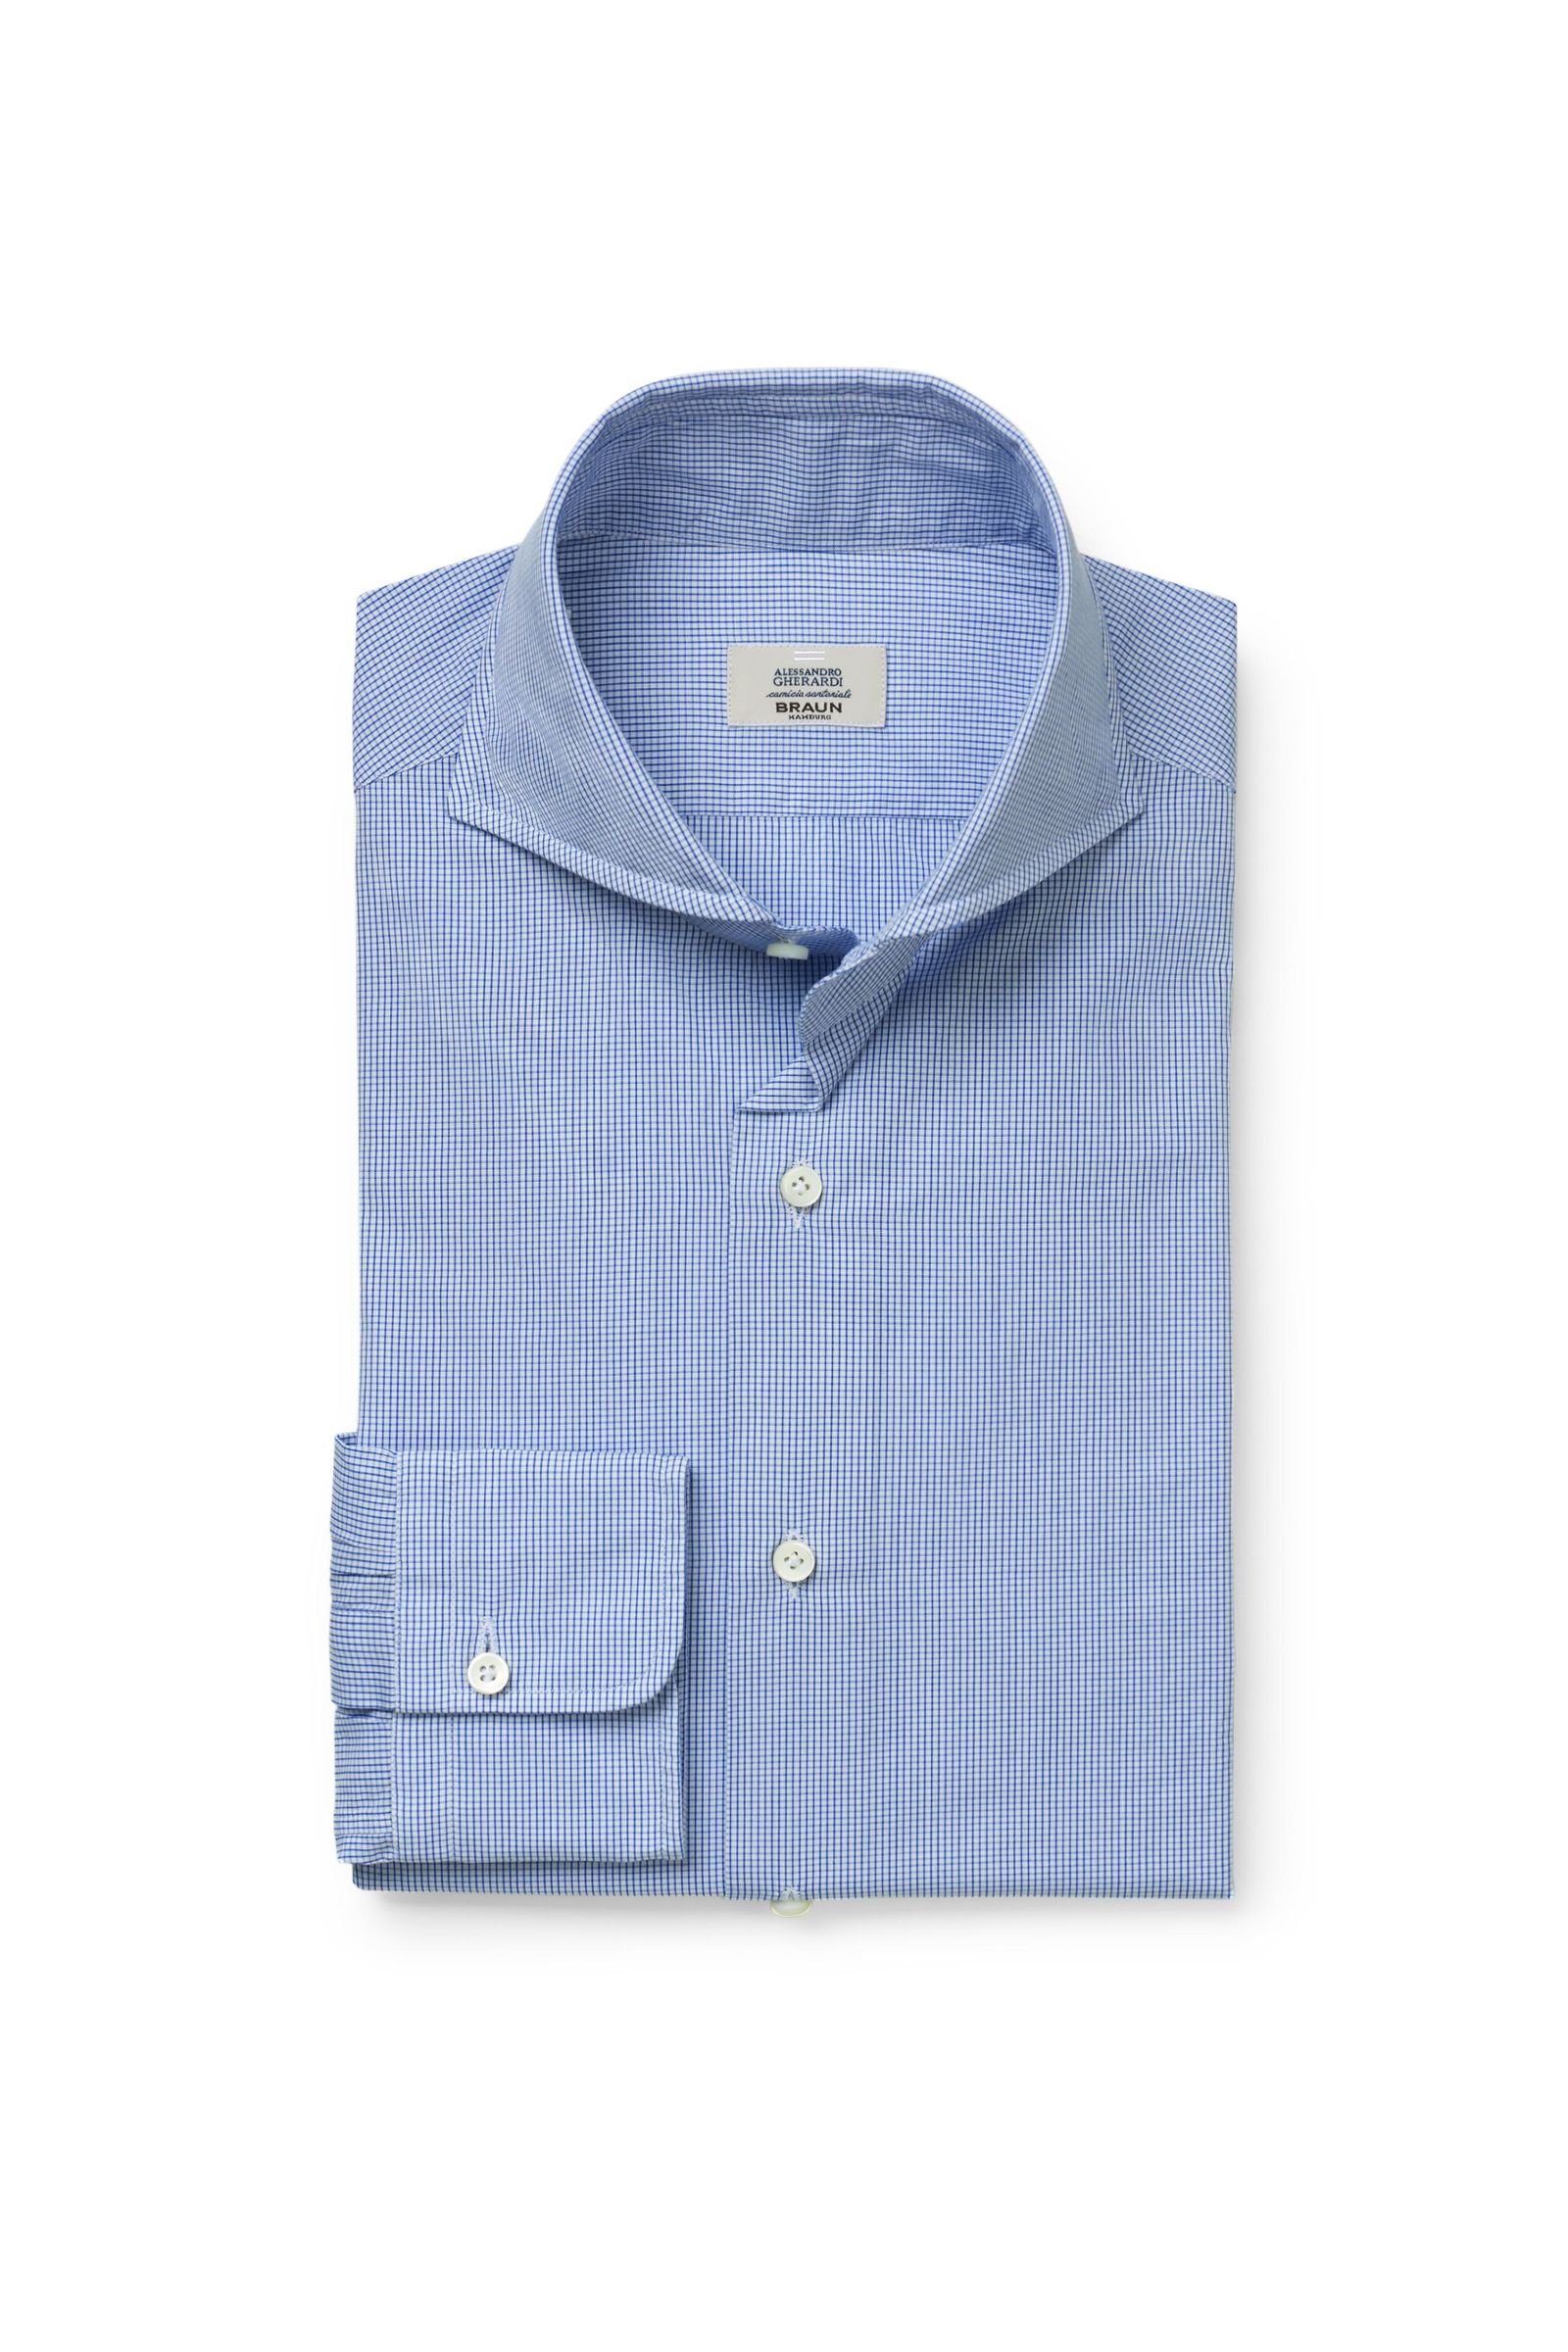 Business shirt shark collar blue/white checked